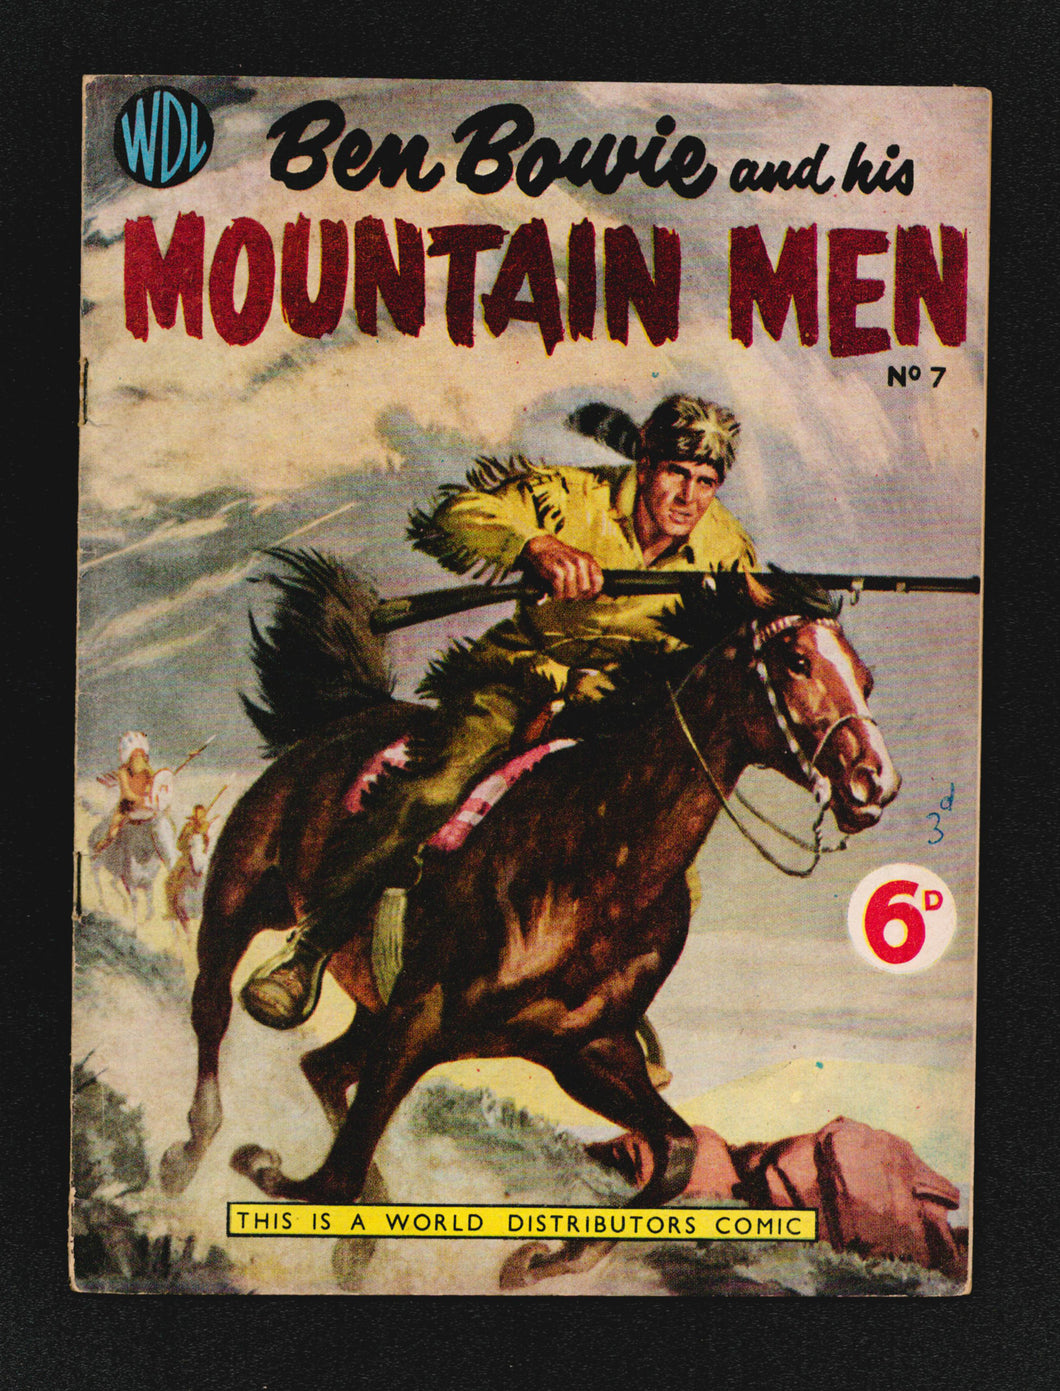 Ben Bowie and his Mountain Men No 7